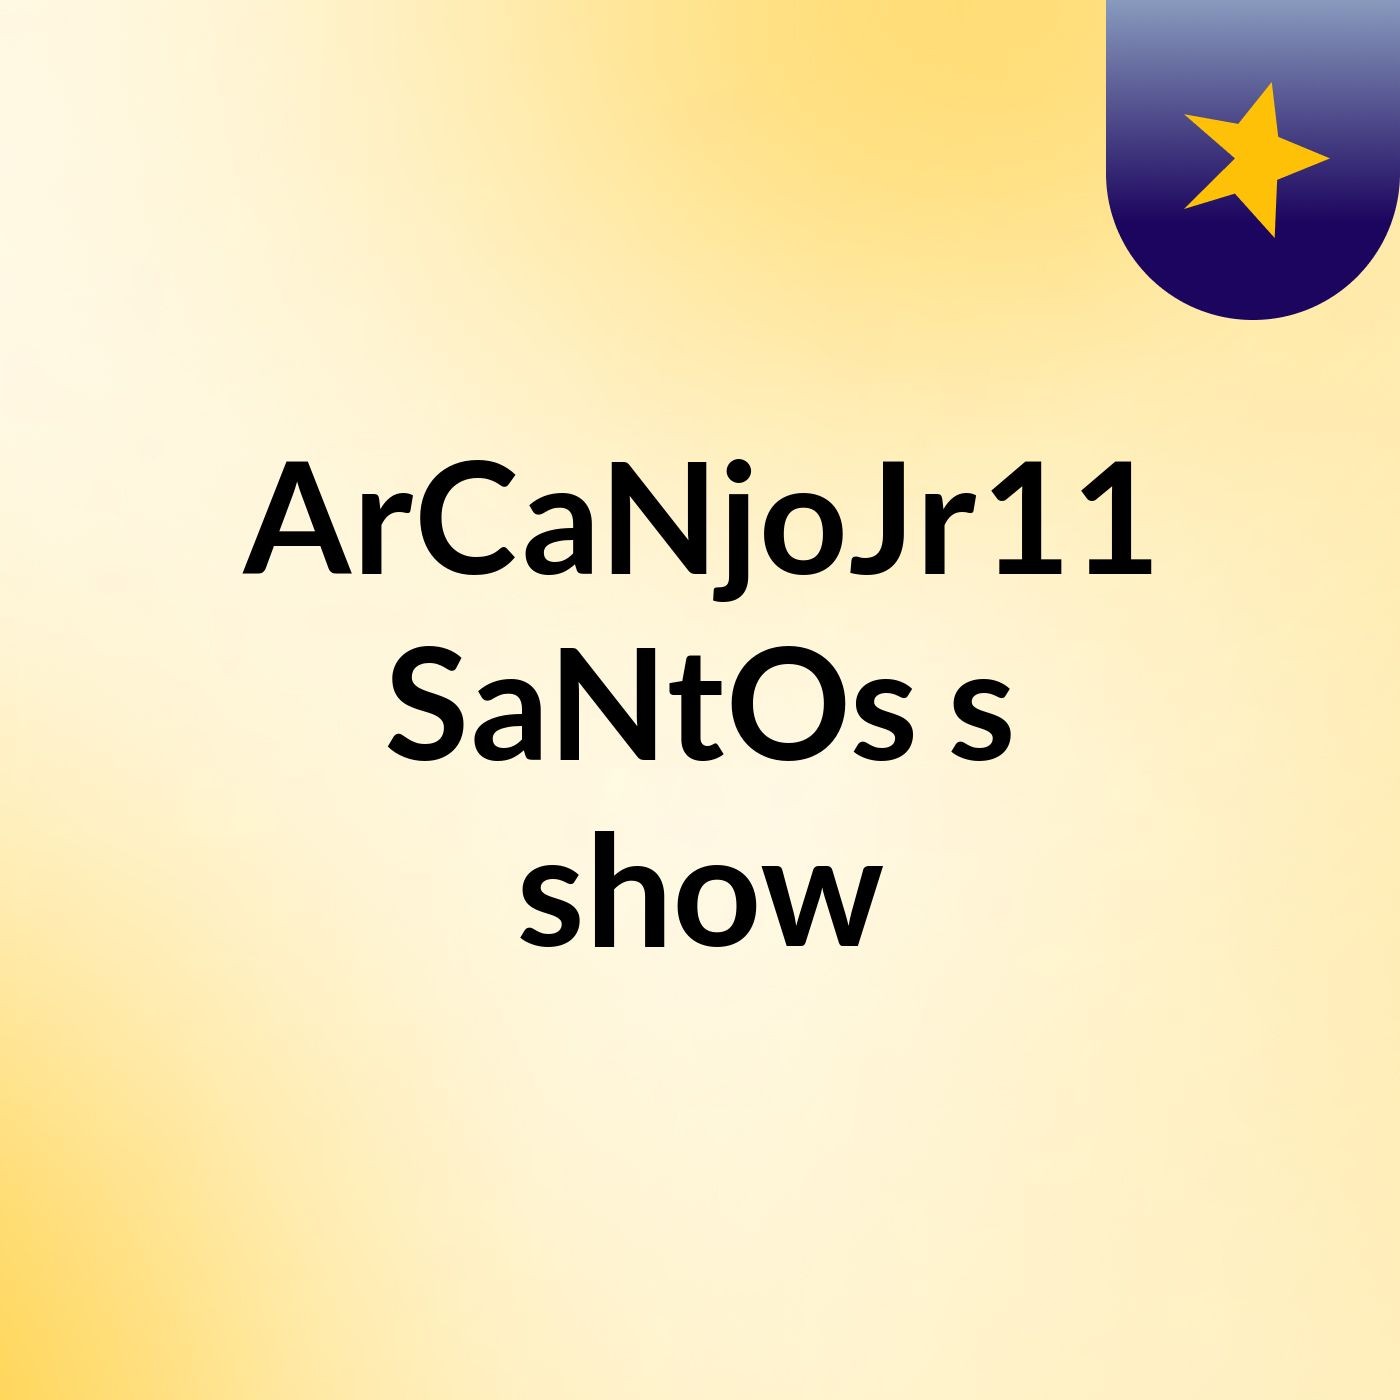 ArCaNjoJr11 SaNtOs's show